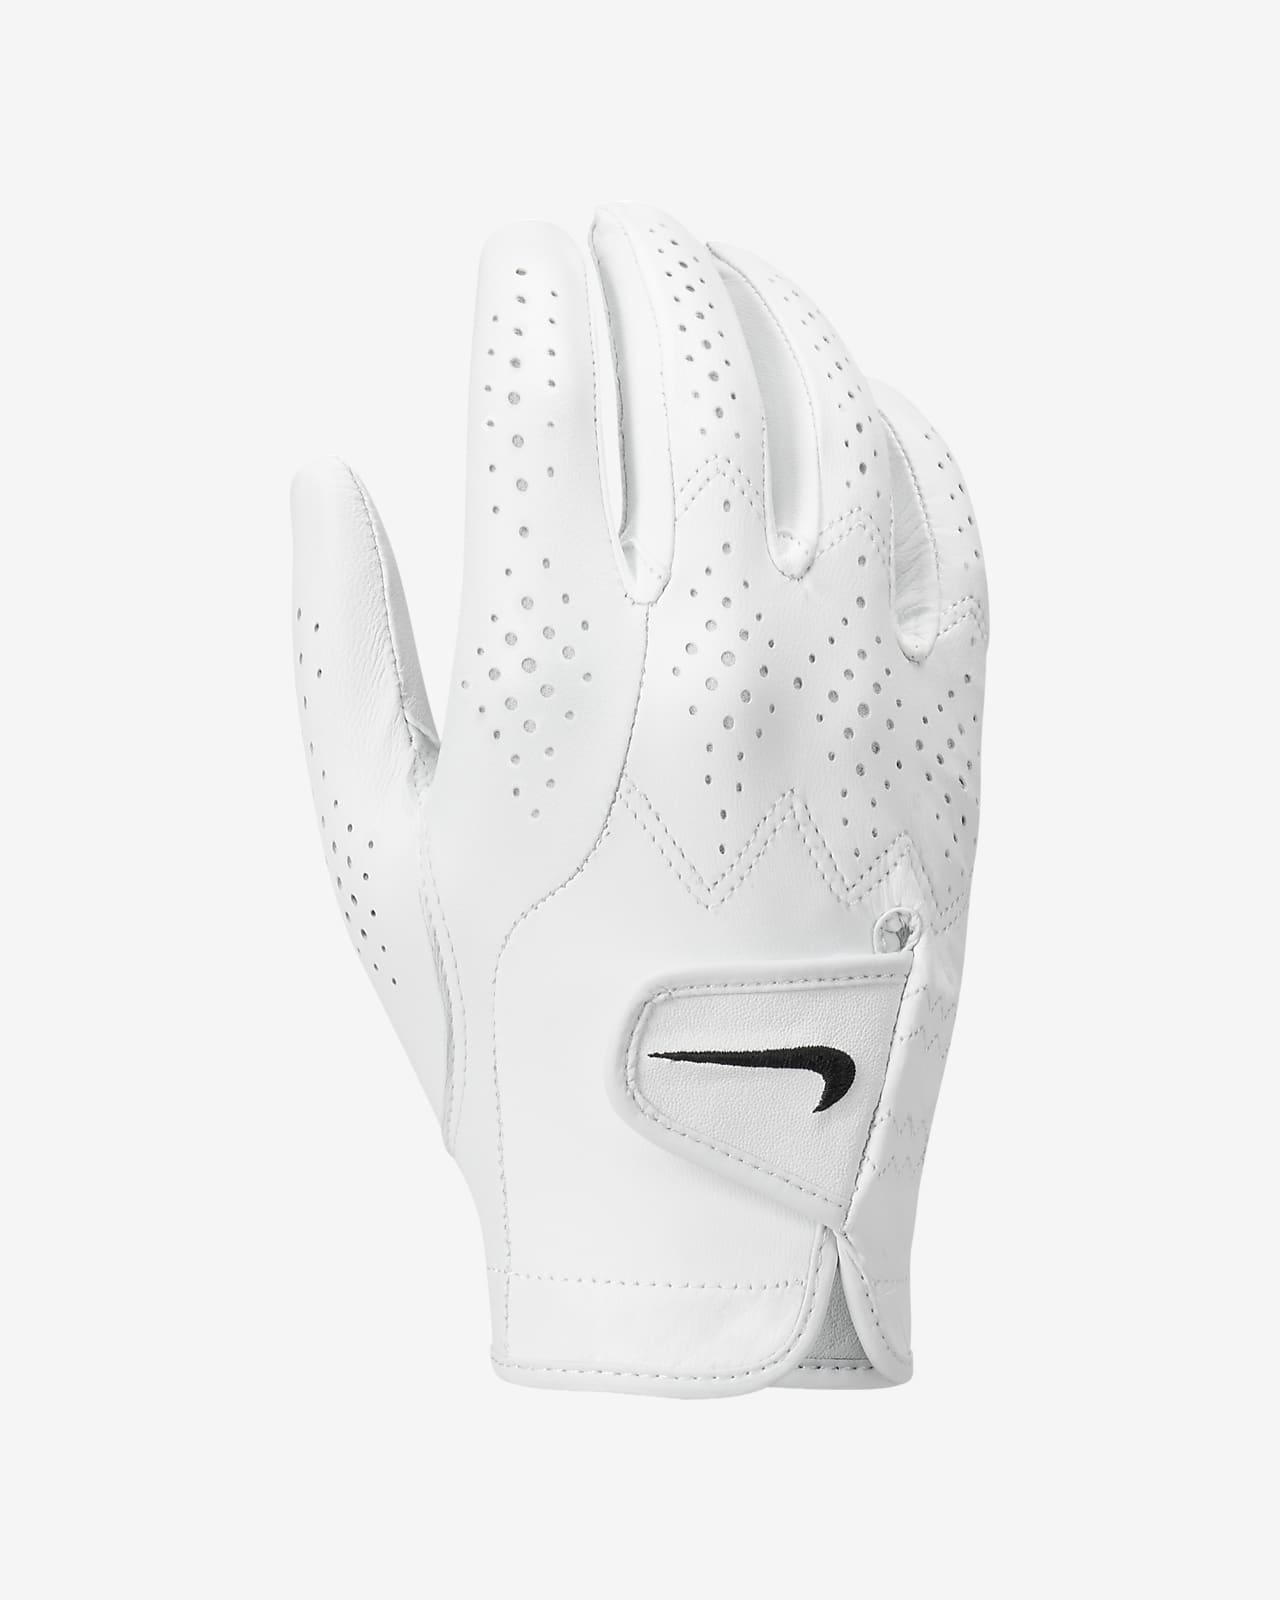 Nike Tour Classic 4 Men's Golf Glove (Right Hand)